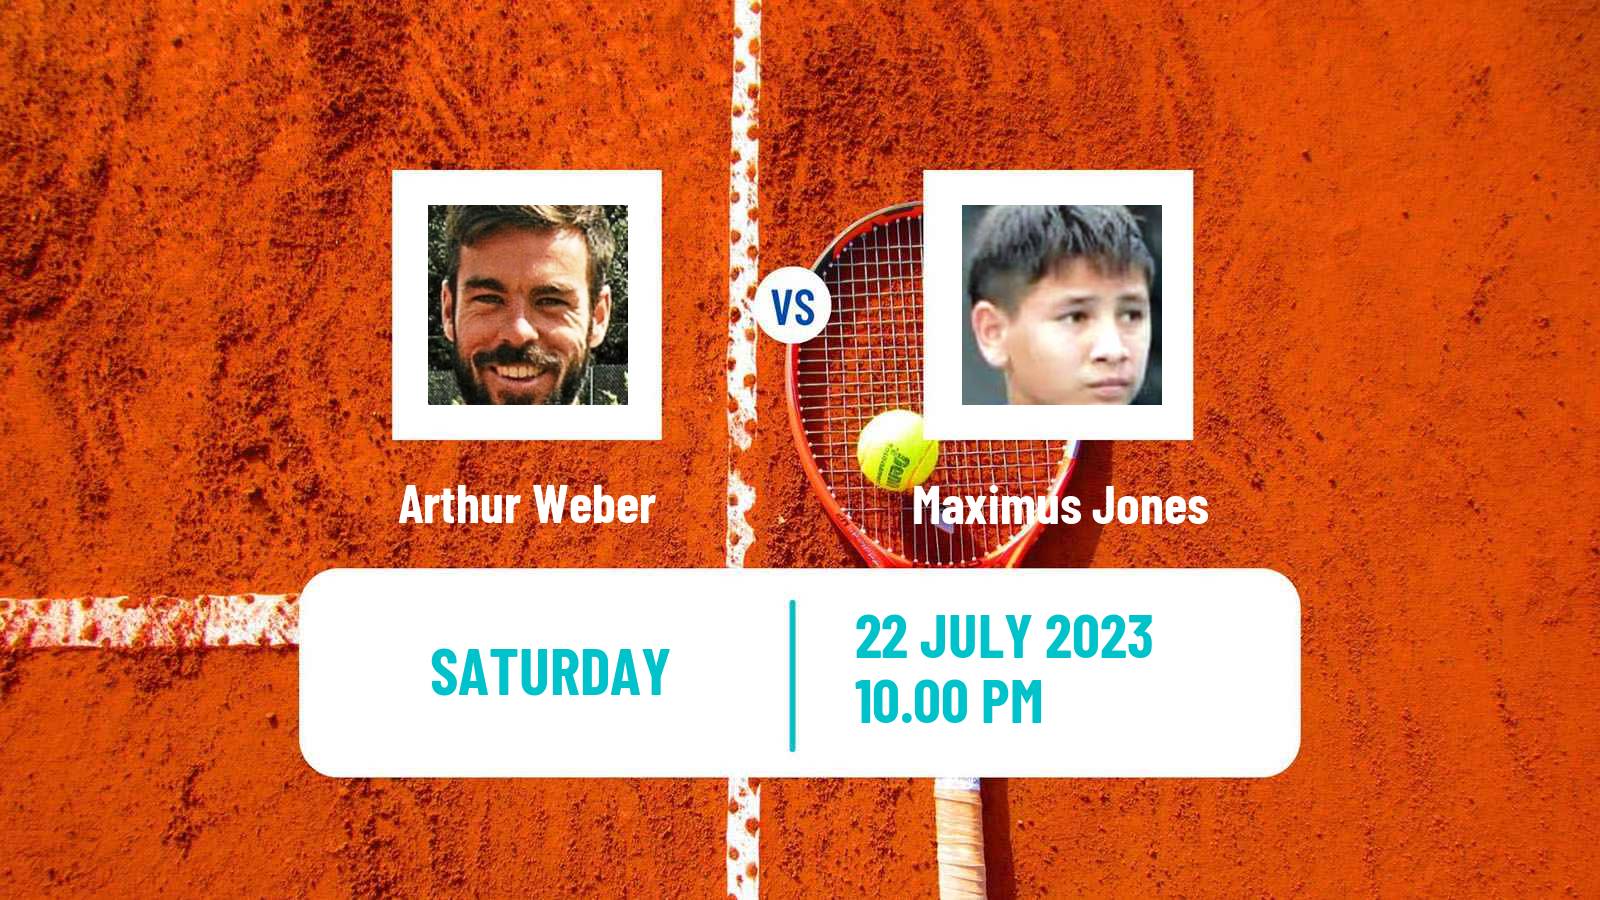 Tennis ITF M15 Nakhon Si Thammarat 5 Men Arthur Weber - Maximus Jones